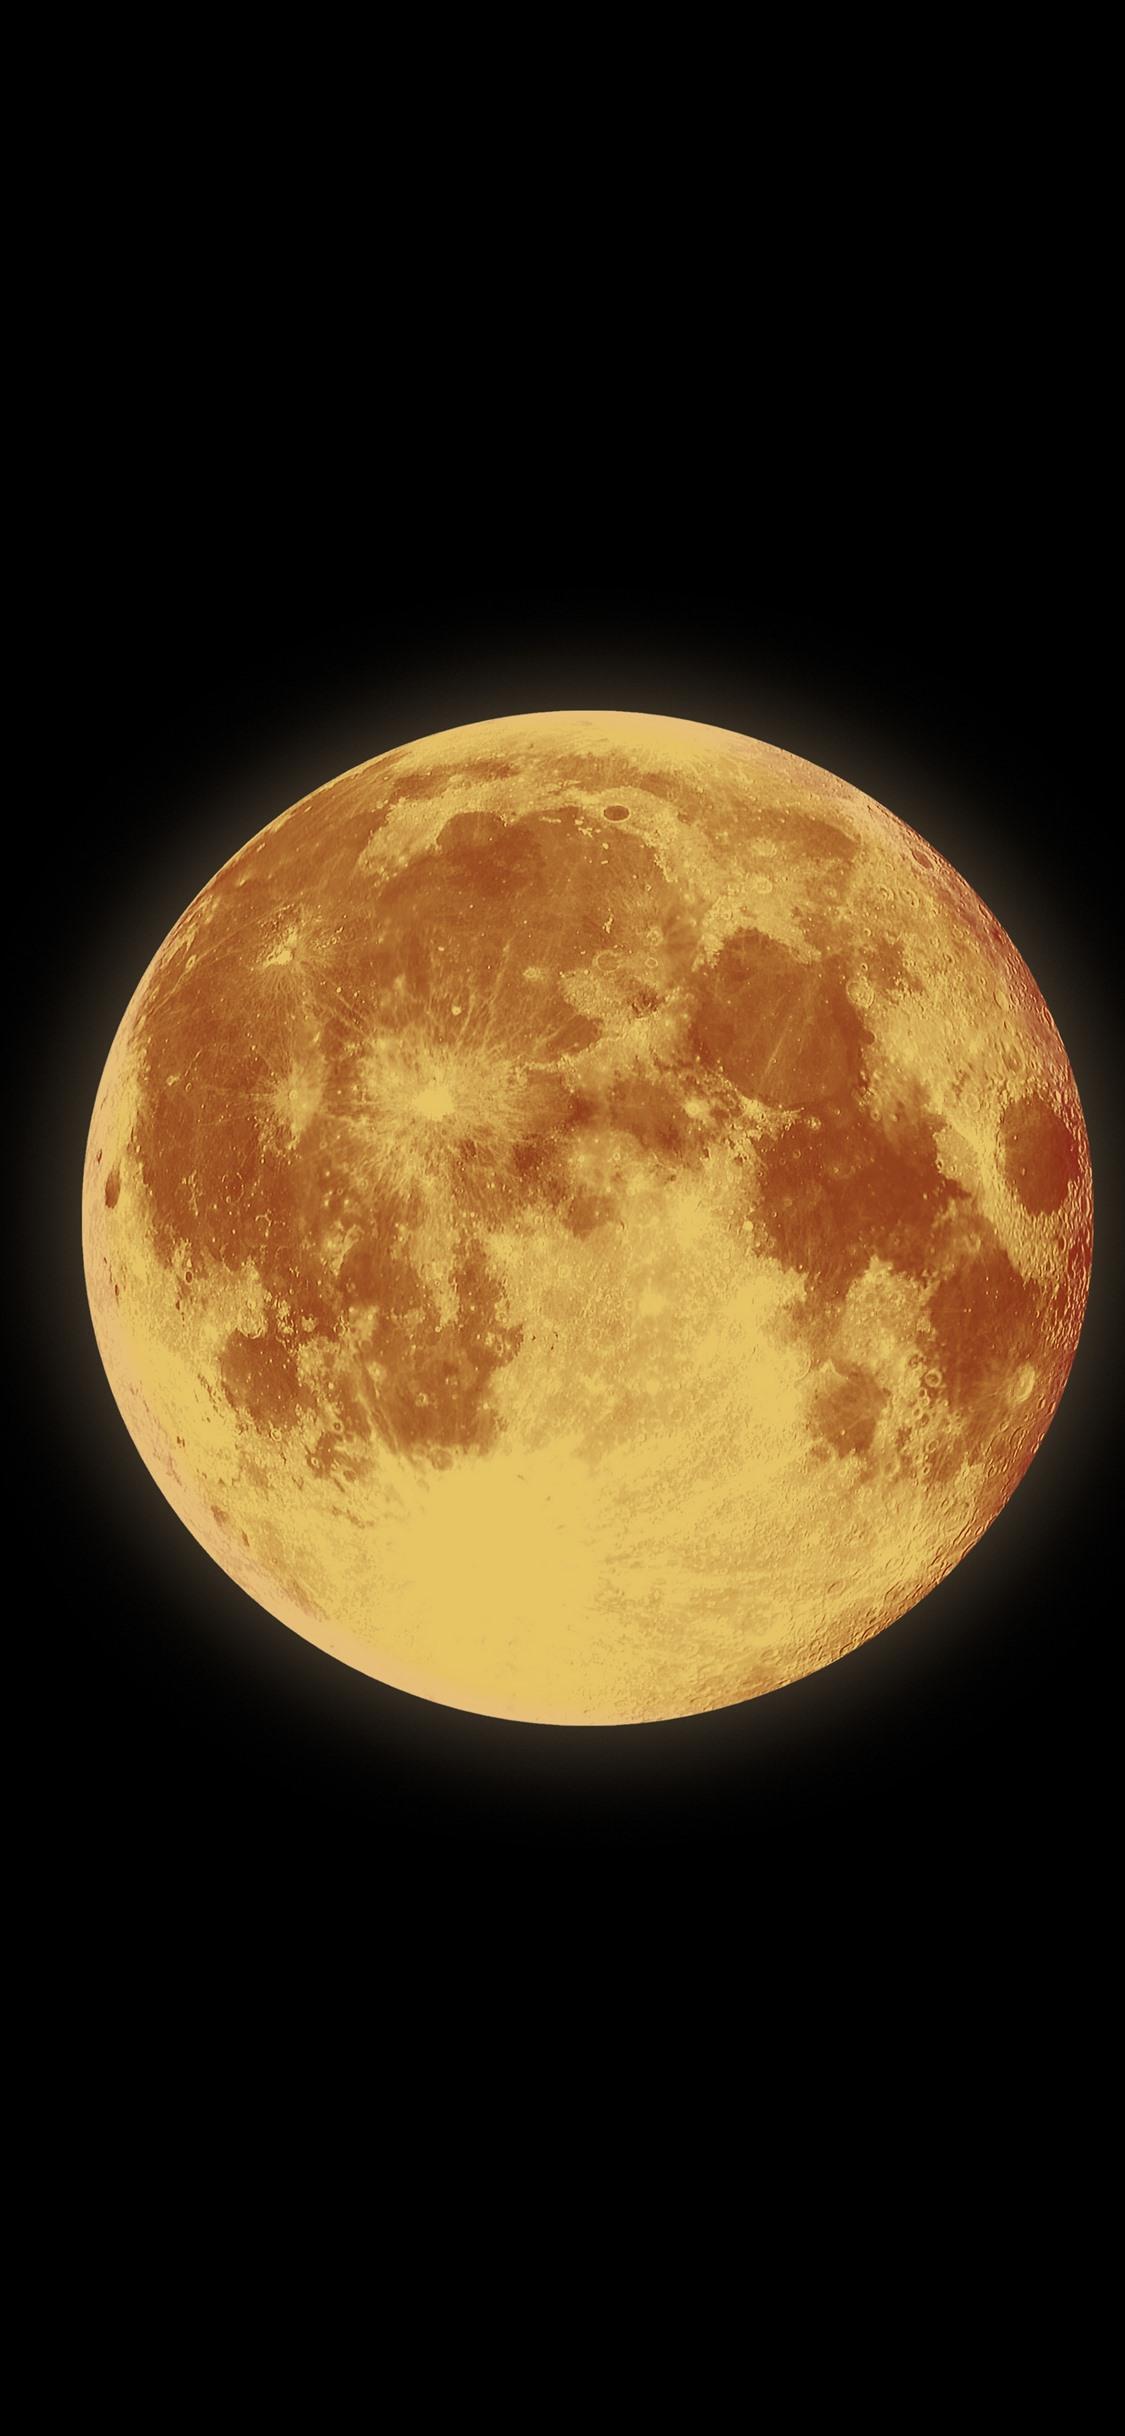 Moon, satellite, space, black background 1125x2436 iPhone 11 Pro